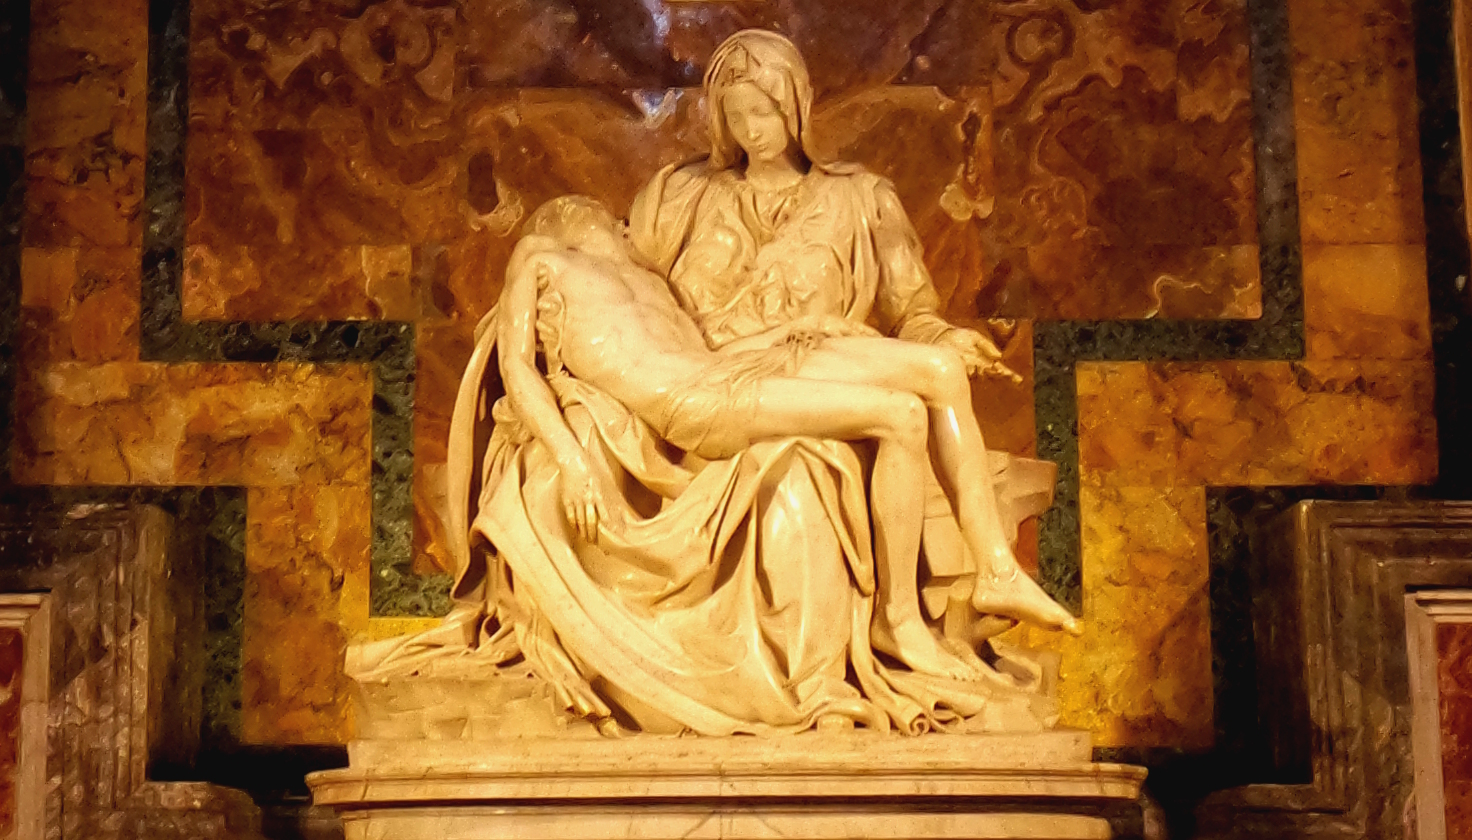 Pietà, de Michelangelo, com Maria segurando o corpo inerte de Jesus Cristo